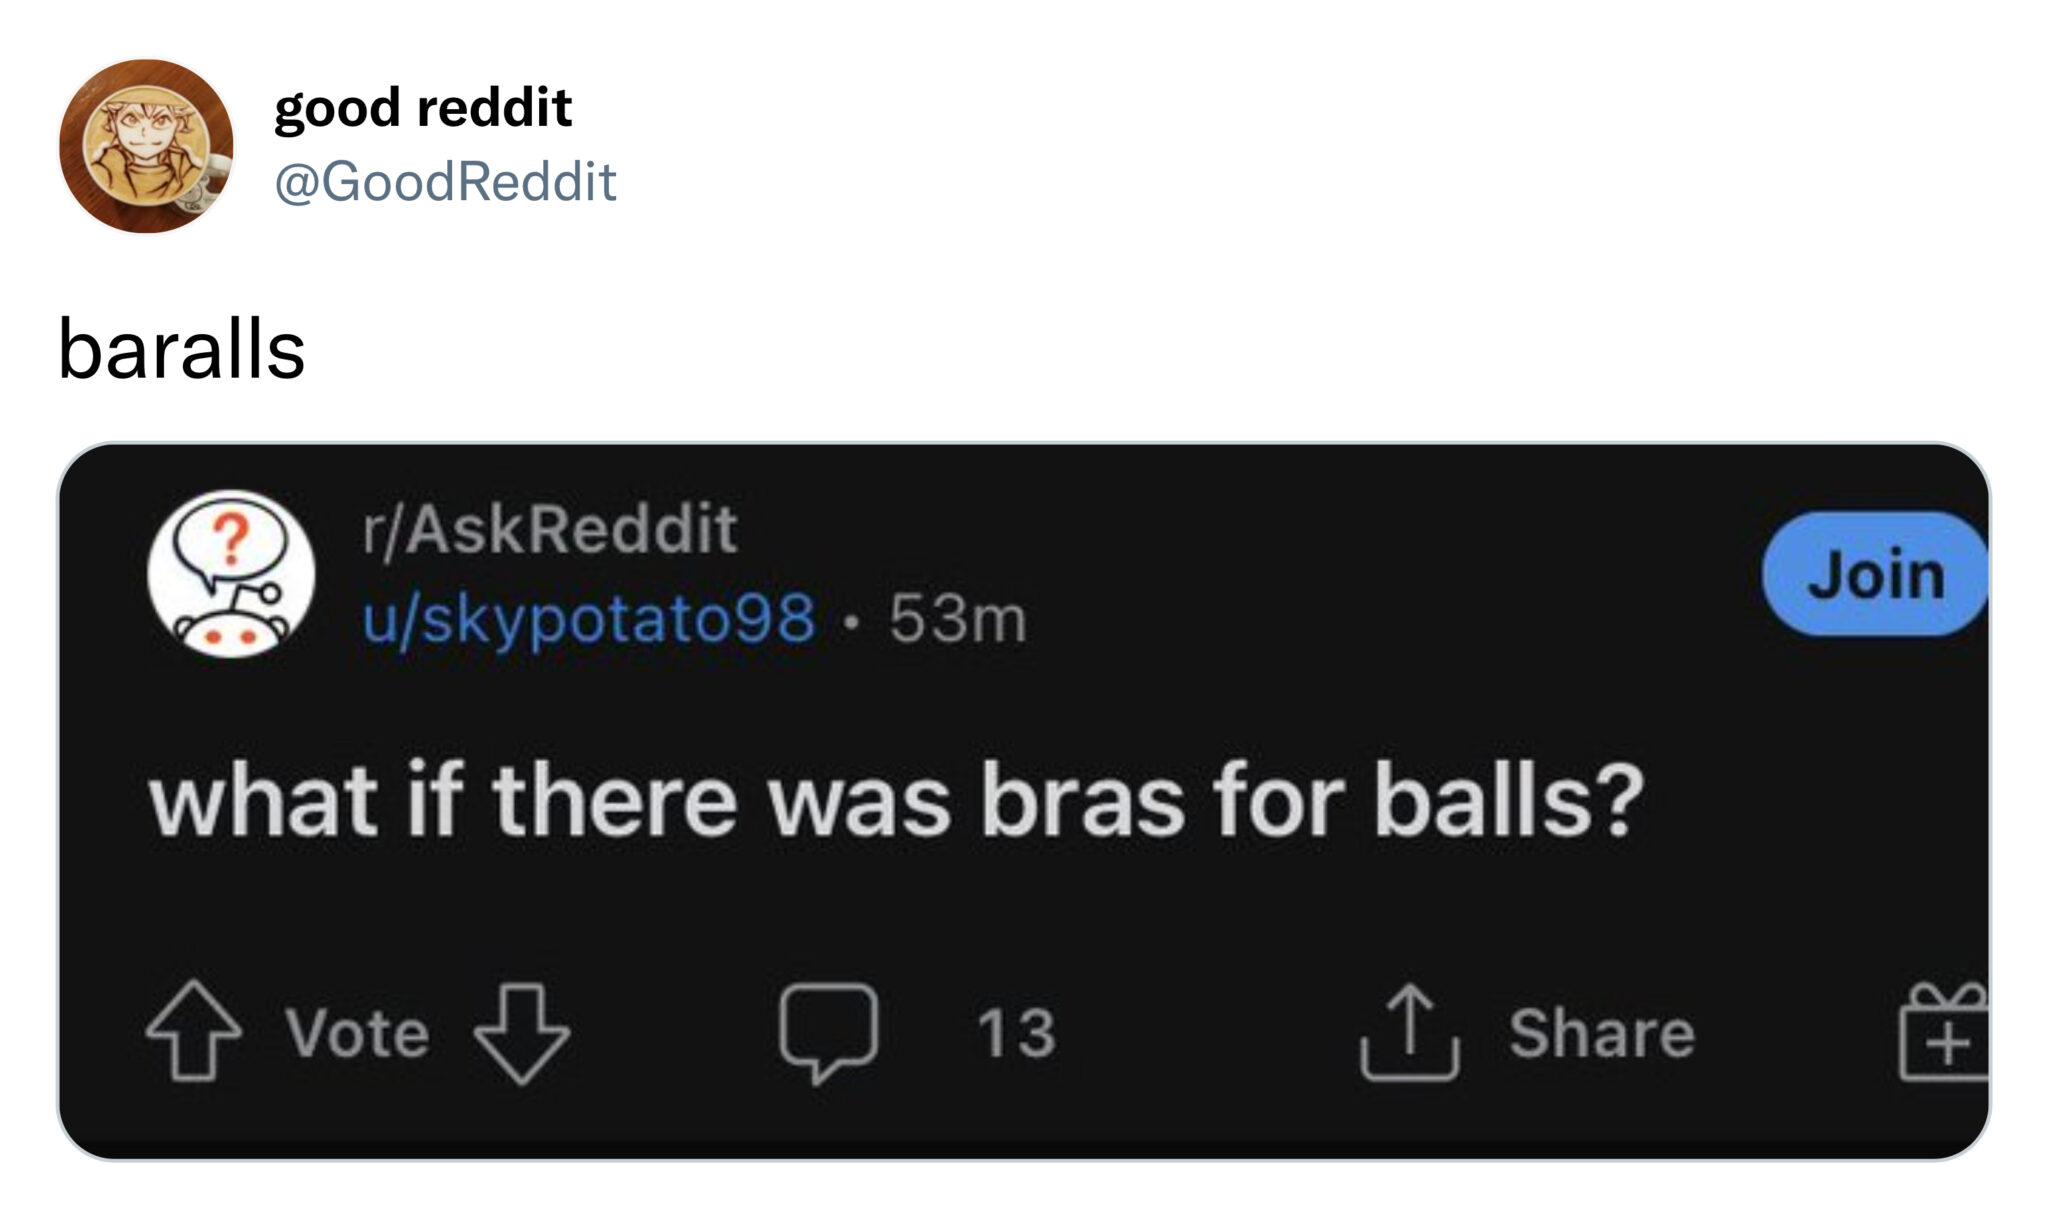 funny tweets - multimedia - good reddit baralls rAskReddit uskypotato98 53m Join what if there was bras for balls? Vote B Vote 13 1,